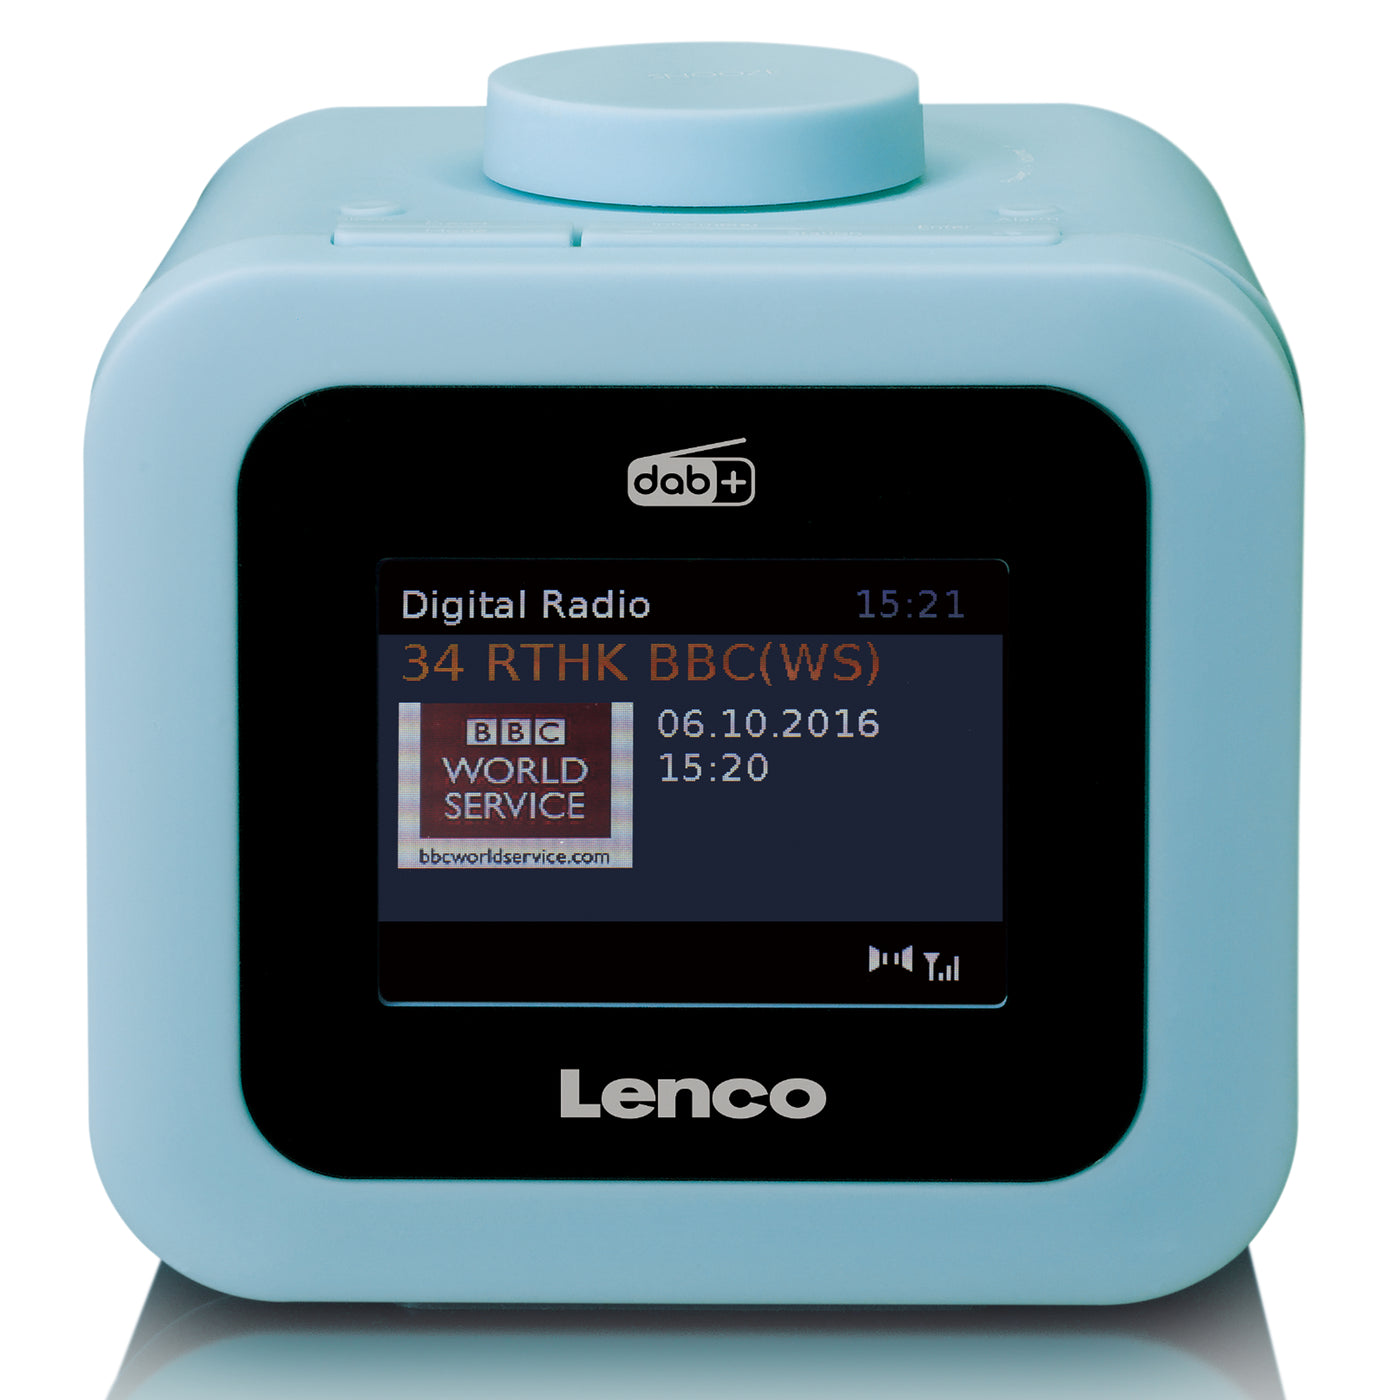 LENCO CR-620BU - DAB+/FM Clock Radio with colour display - Blue